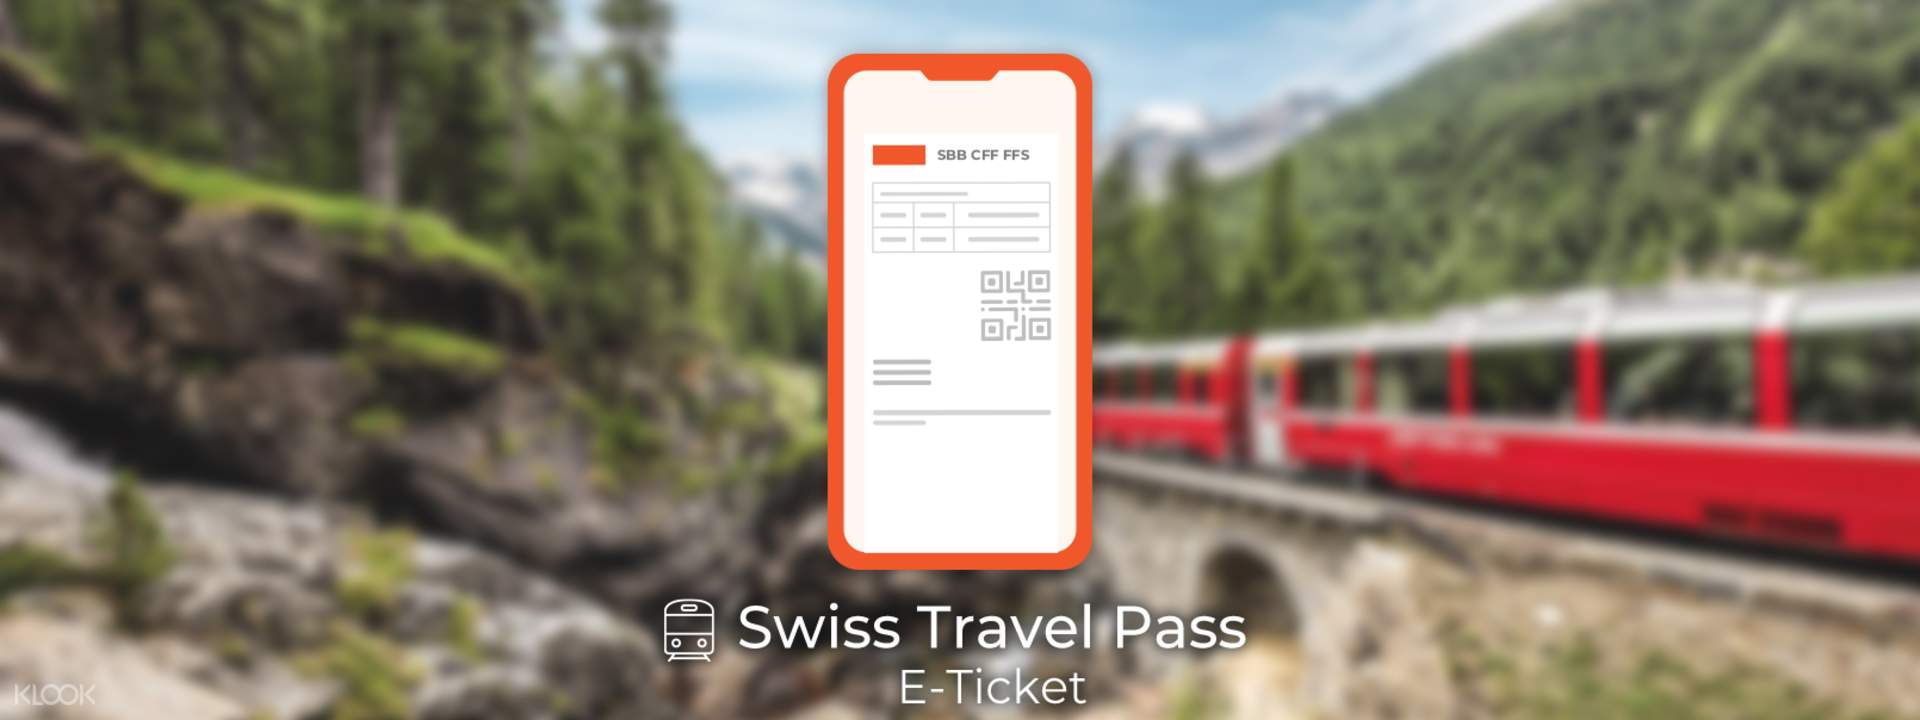 swiss travel pass on sale